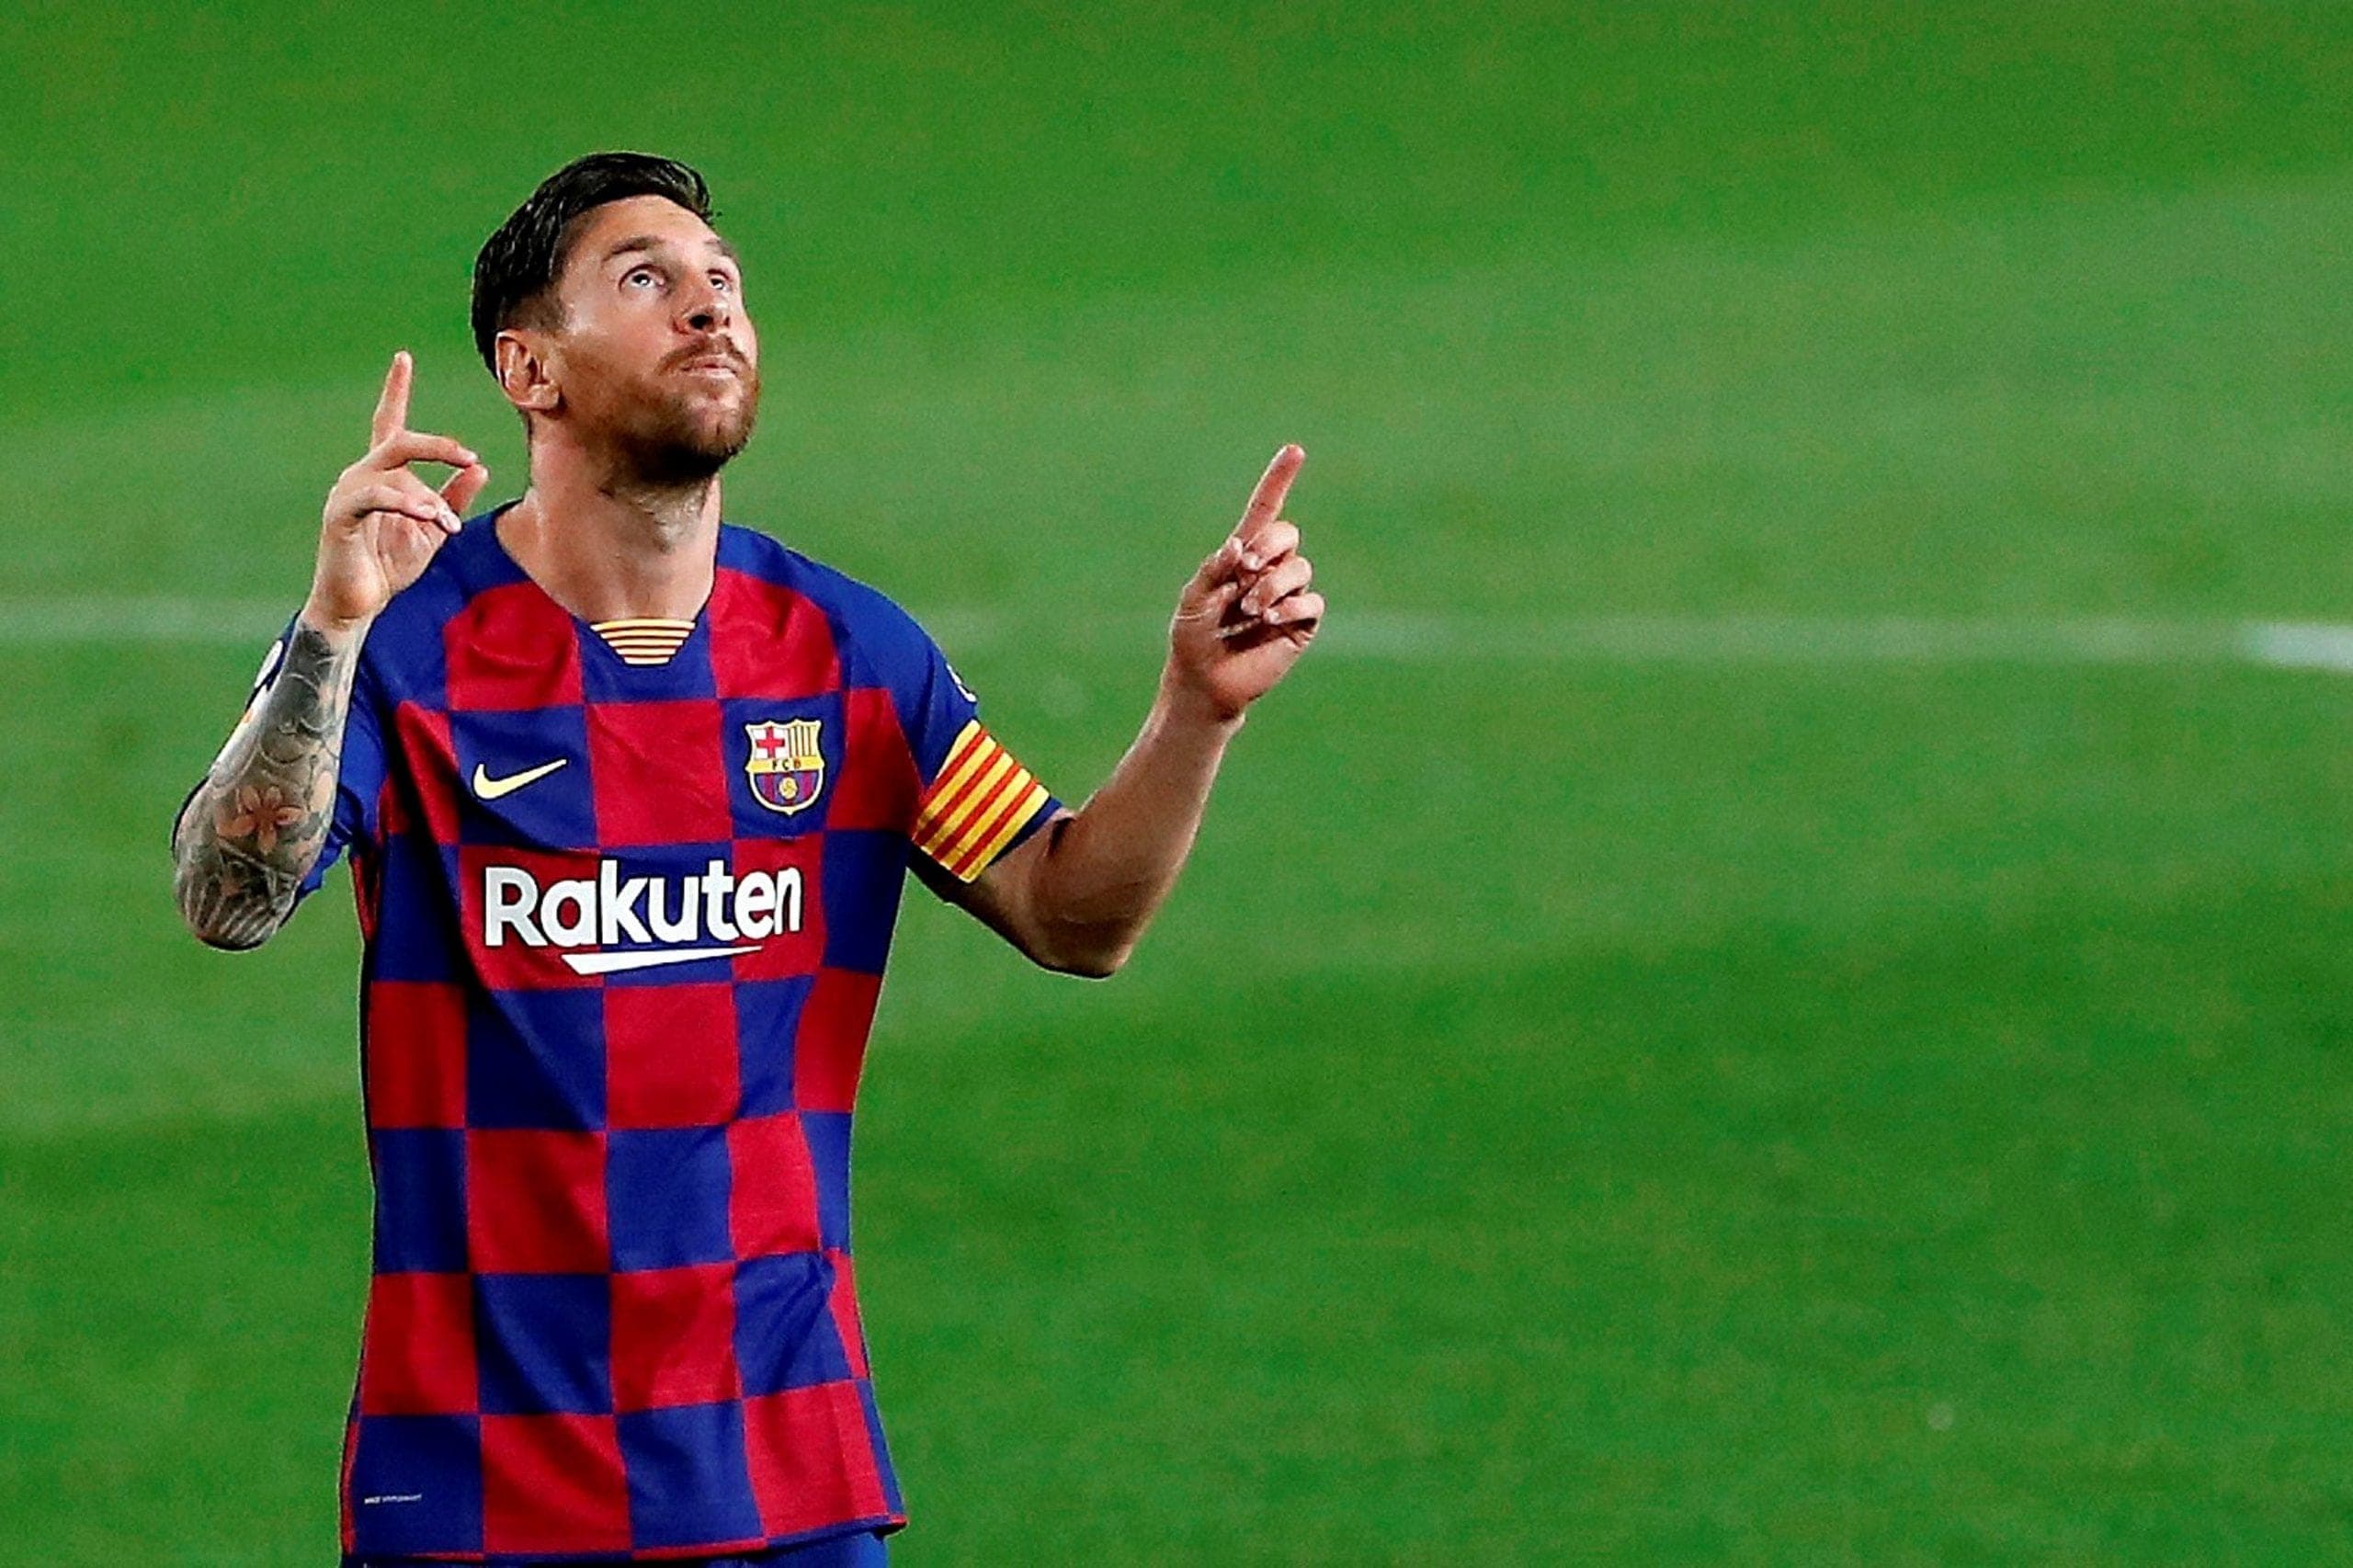 Cuánto valen los botines "récord" Messi - Forbes Colombia